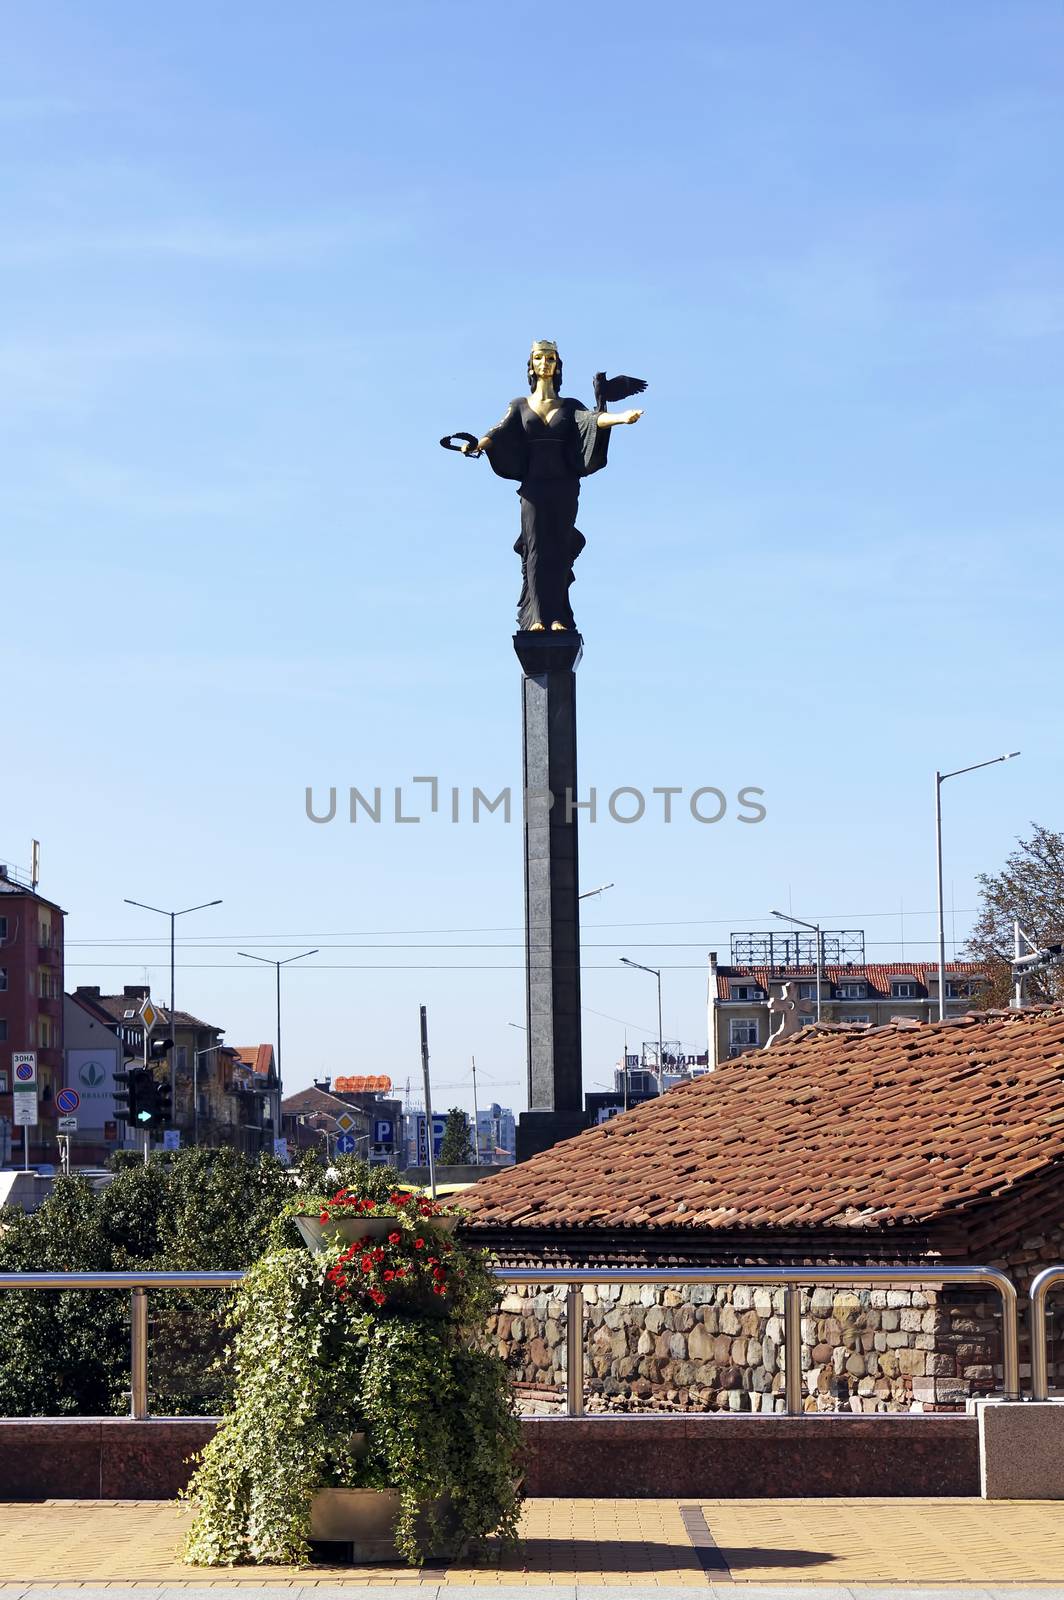 SOFIA, BULGARIA - OCTOBER 01, 2014: Statue of Saint Sofia, designed by the sculptor George Chapkanov in Sofia, Bulgaria 